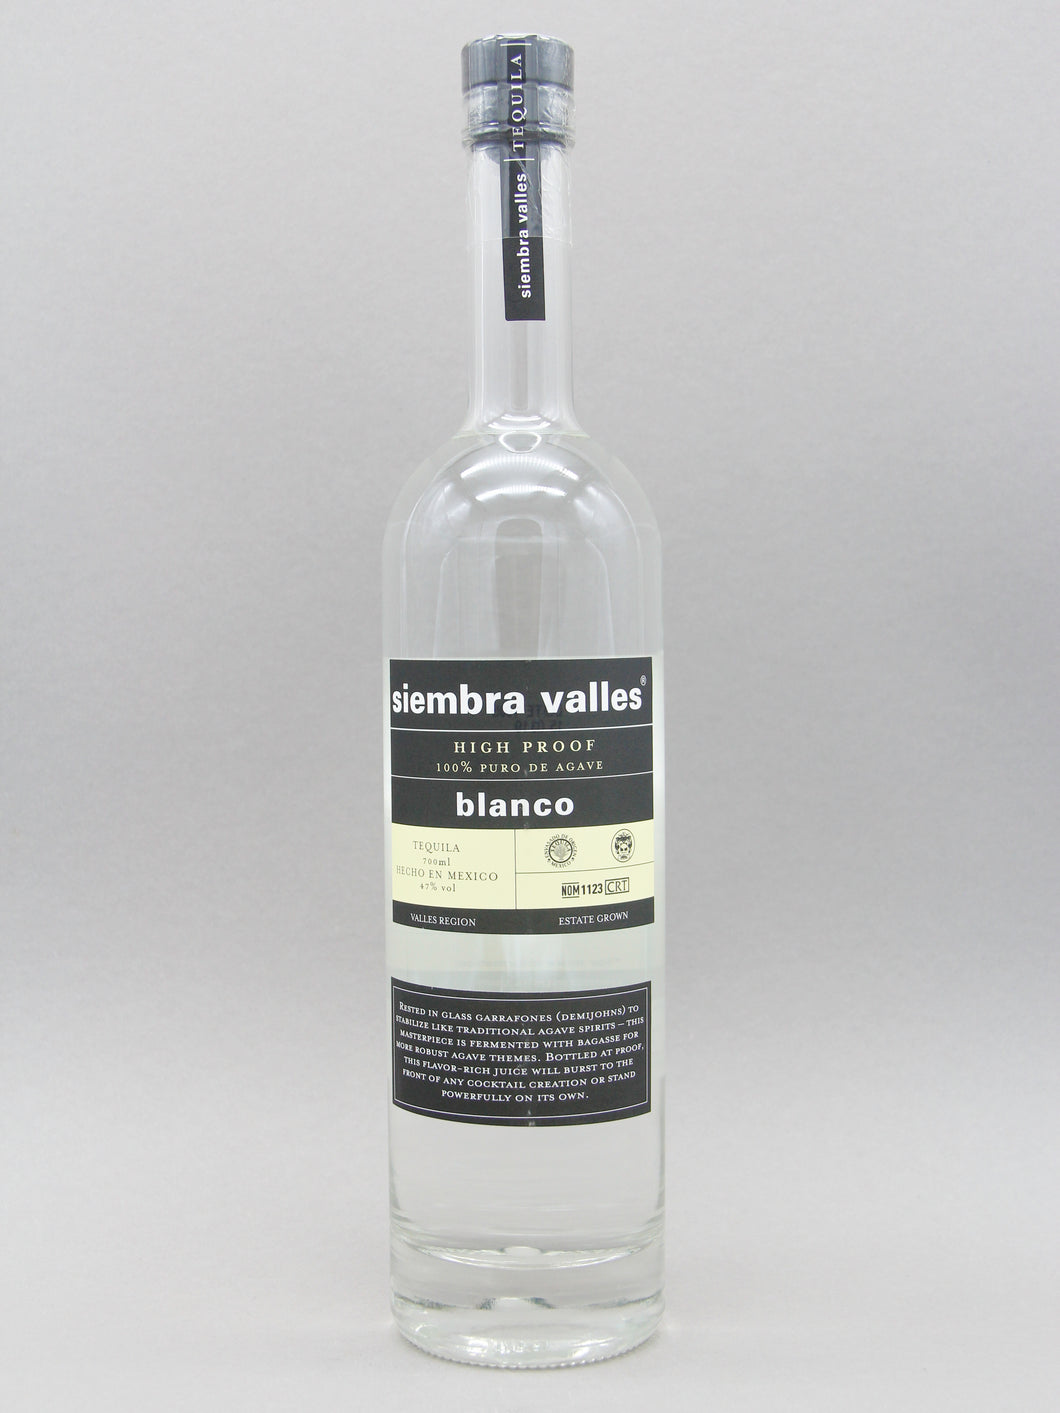 Siembra Valles Tequila Blanco, 100% Puro de Agave (48%, 70cl)